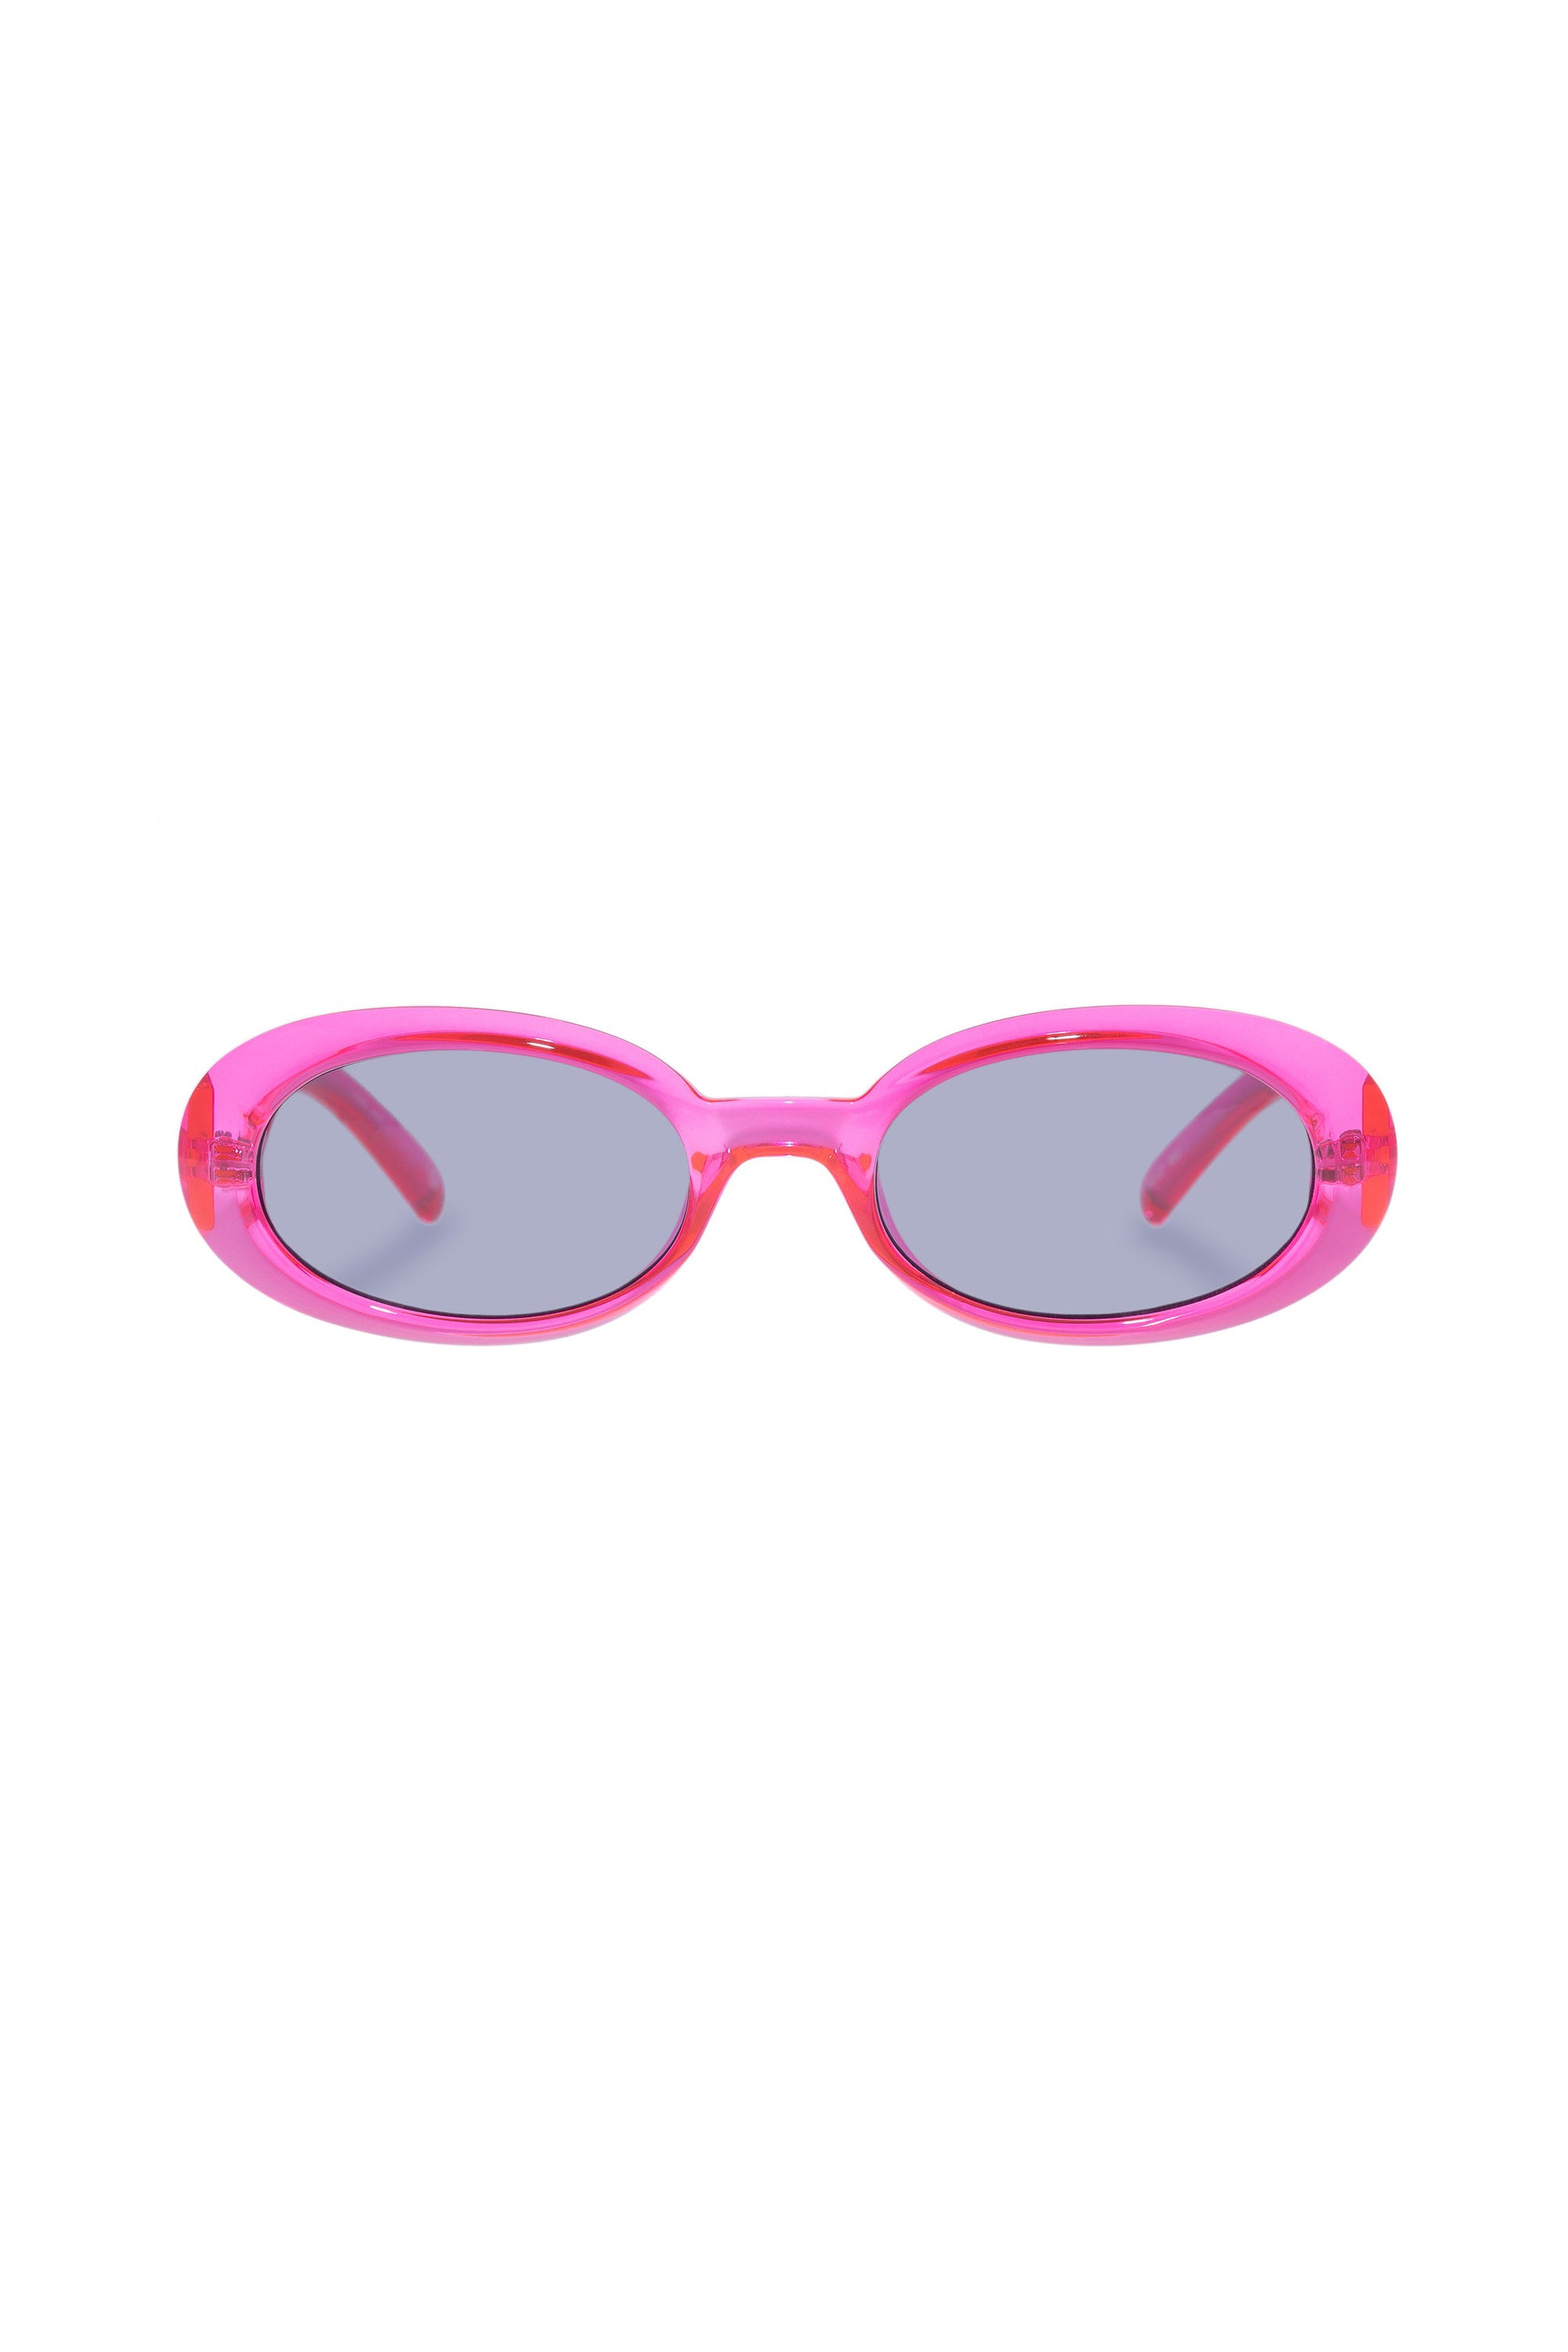 Le Specs Work It! Sunglasses - Hyper Pink - RUM Amsterdam